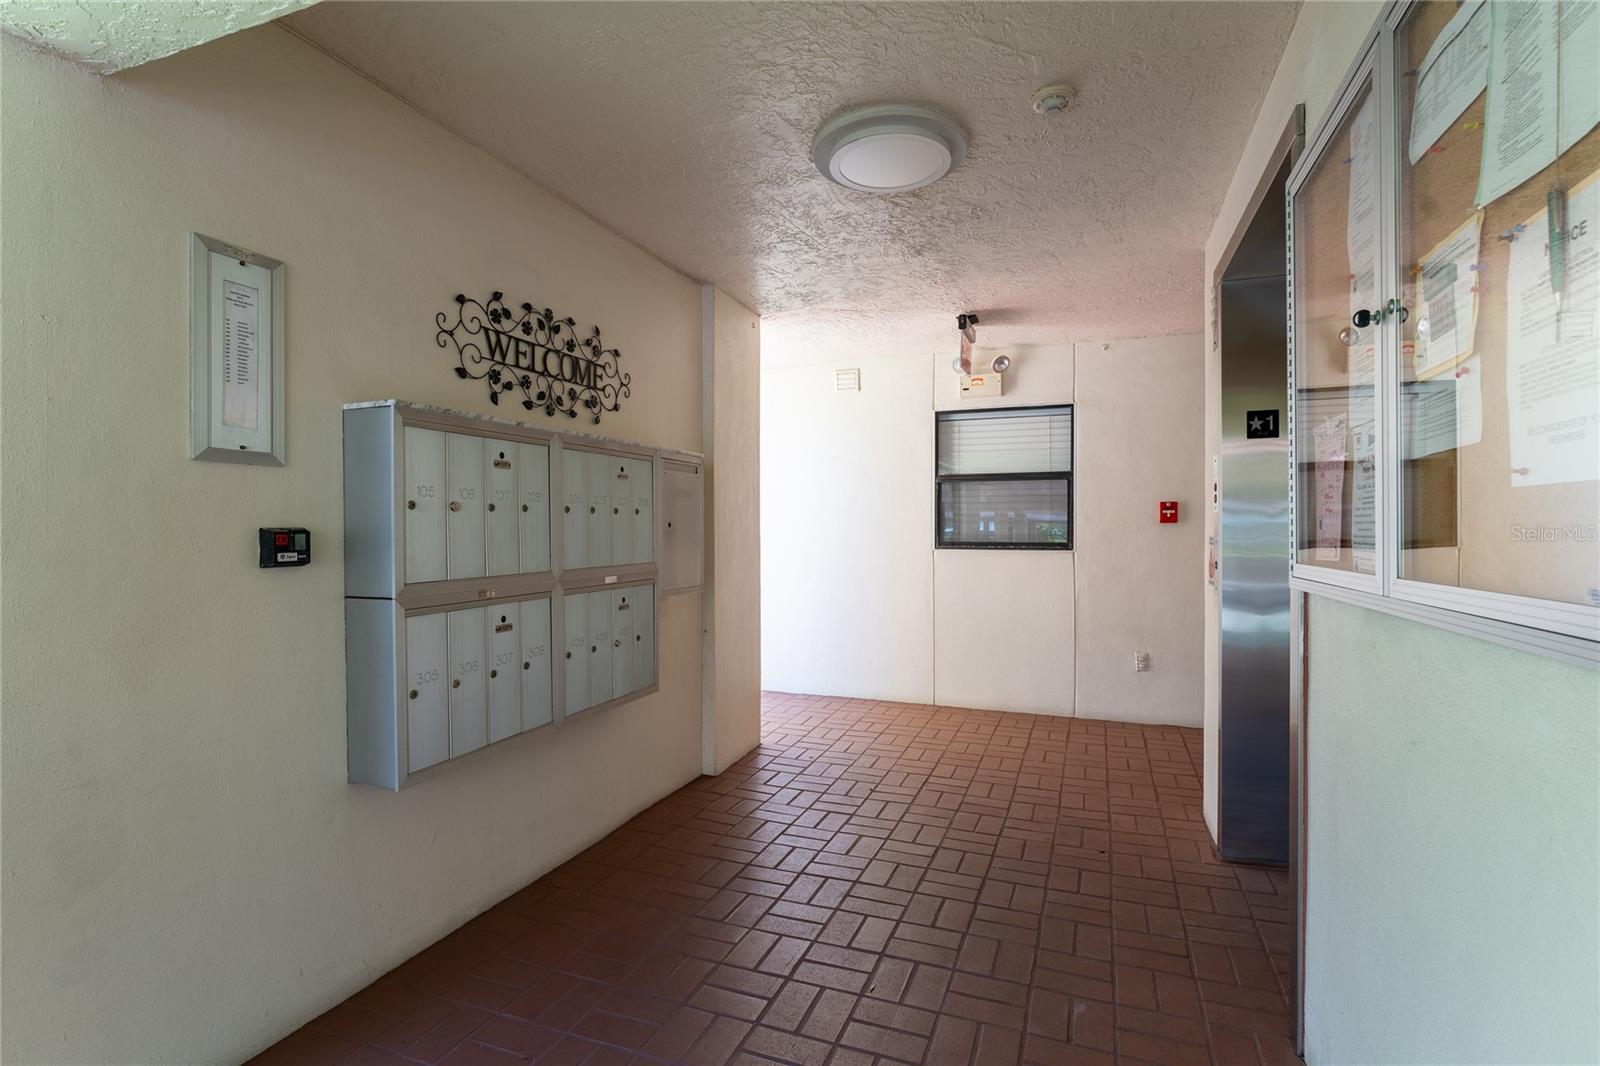 Mailbox access on 1st floor